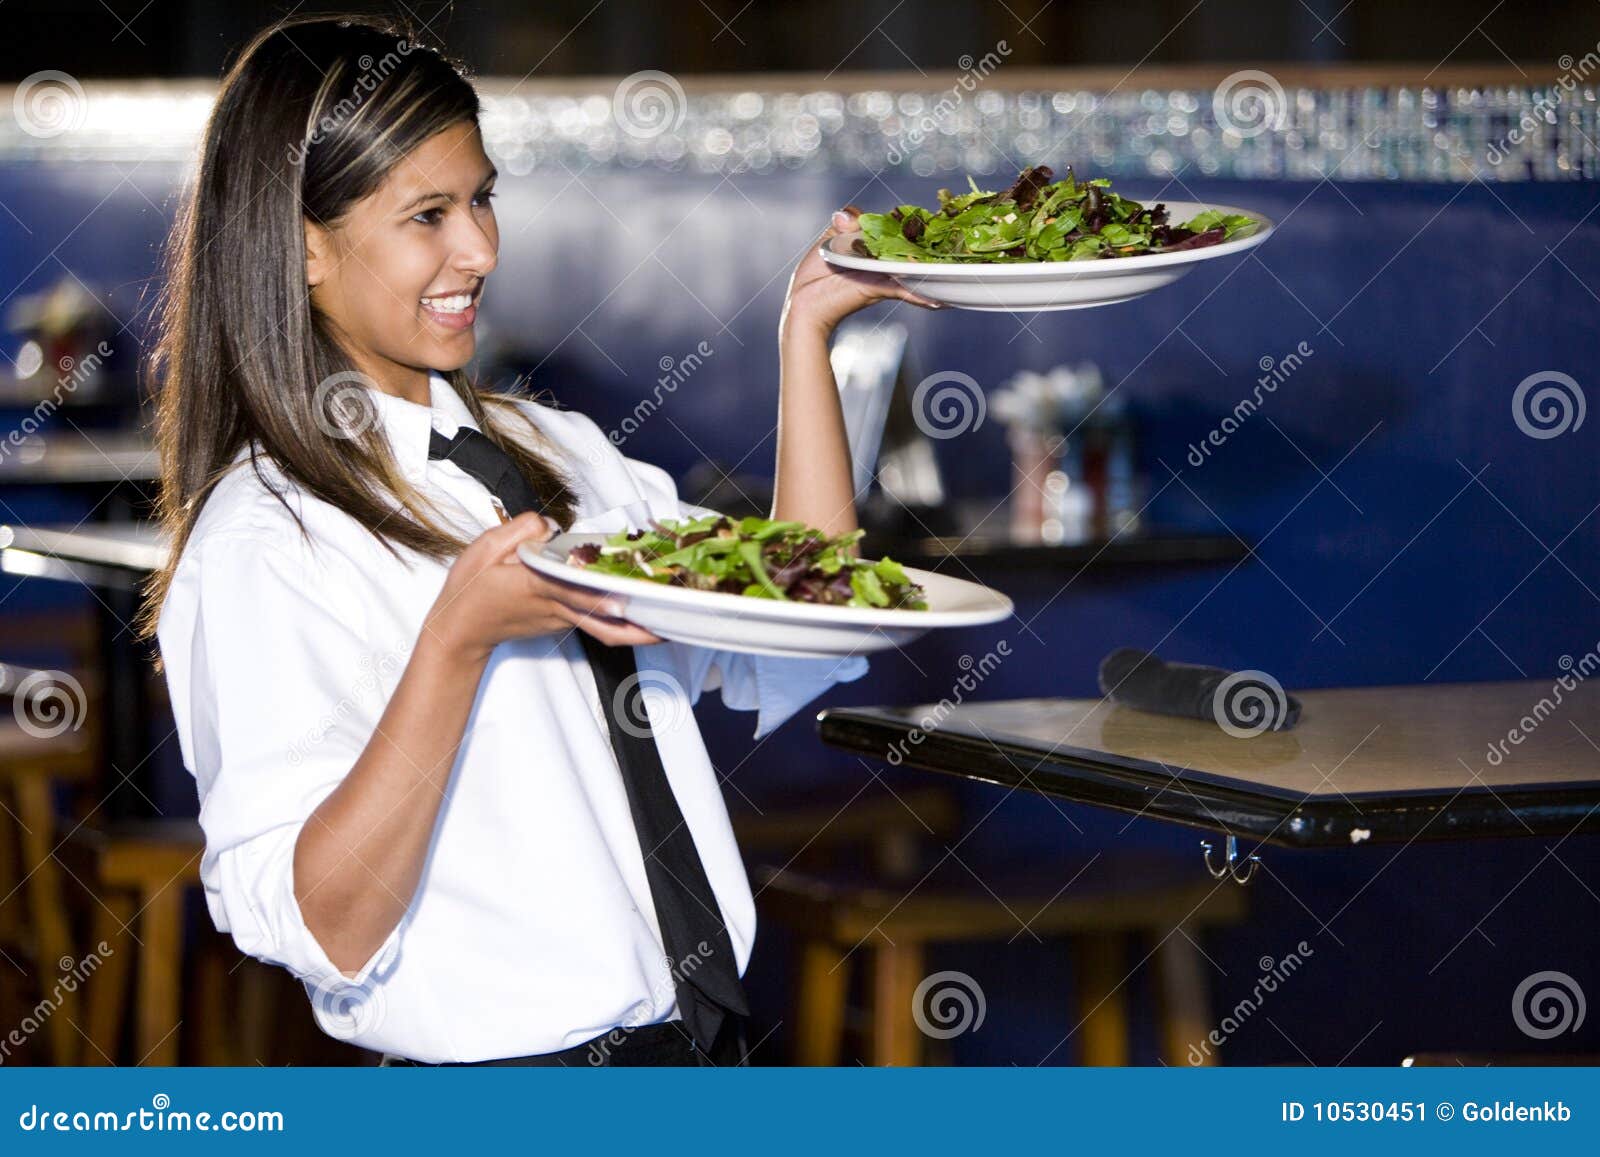 hispanic waitress serving salads